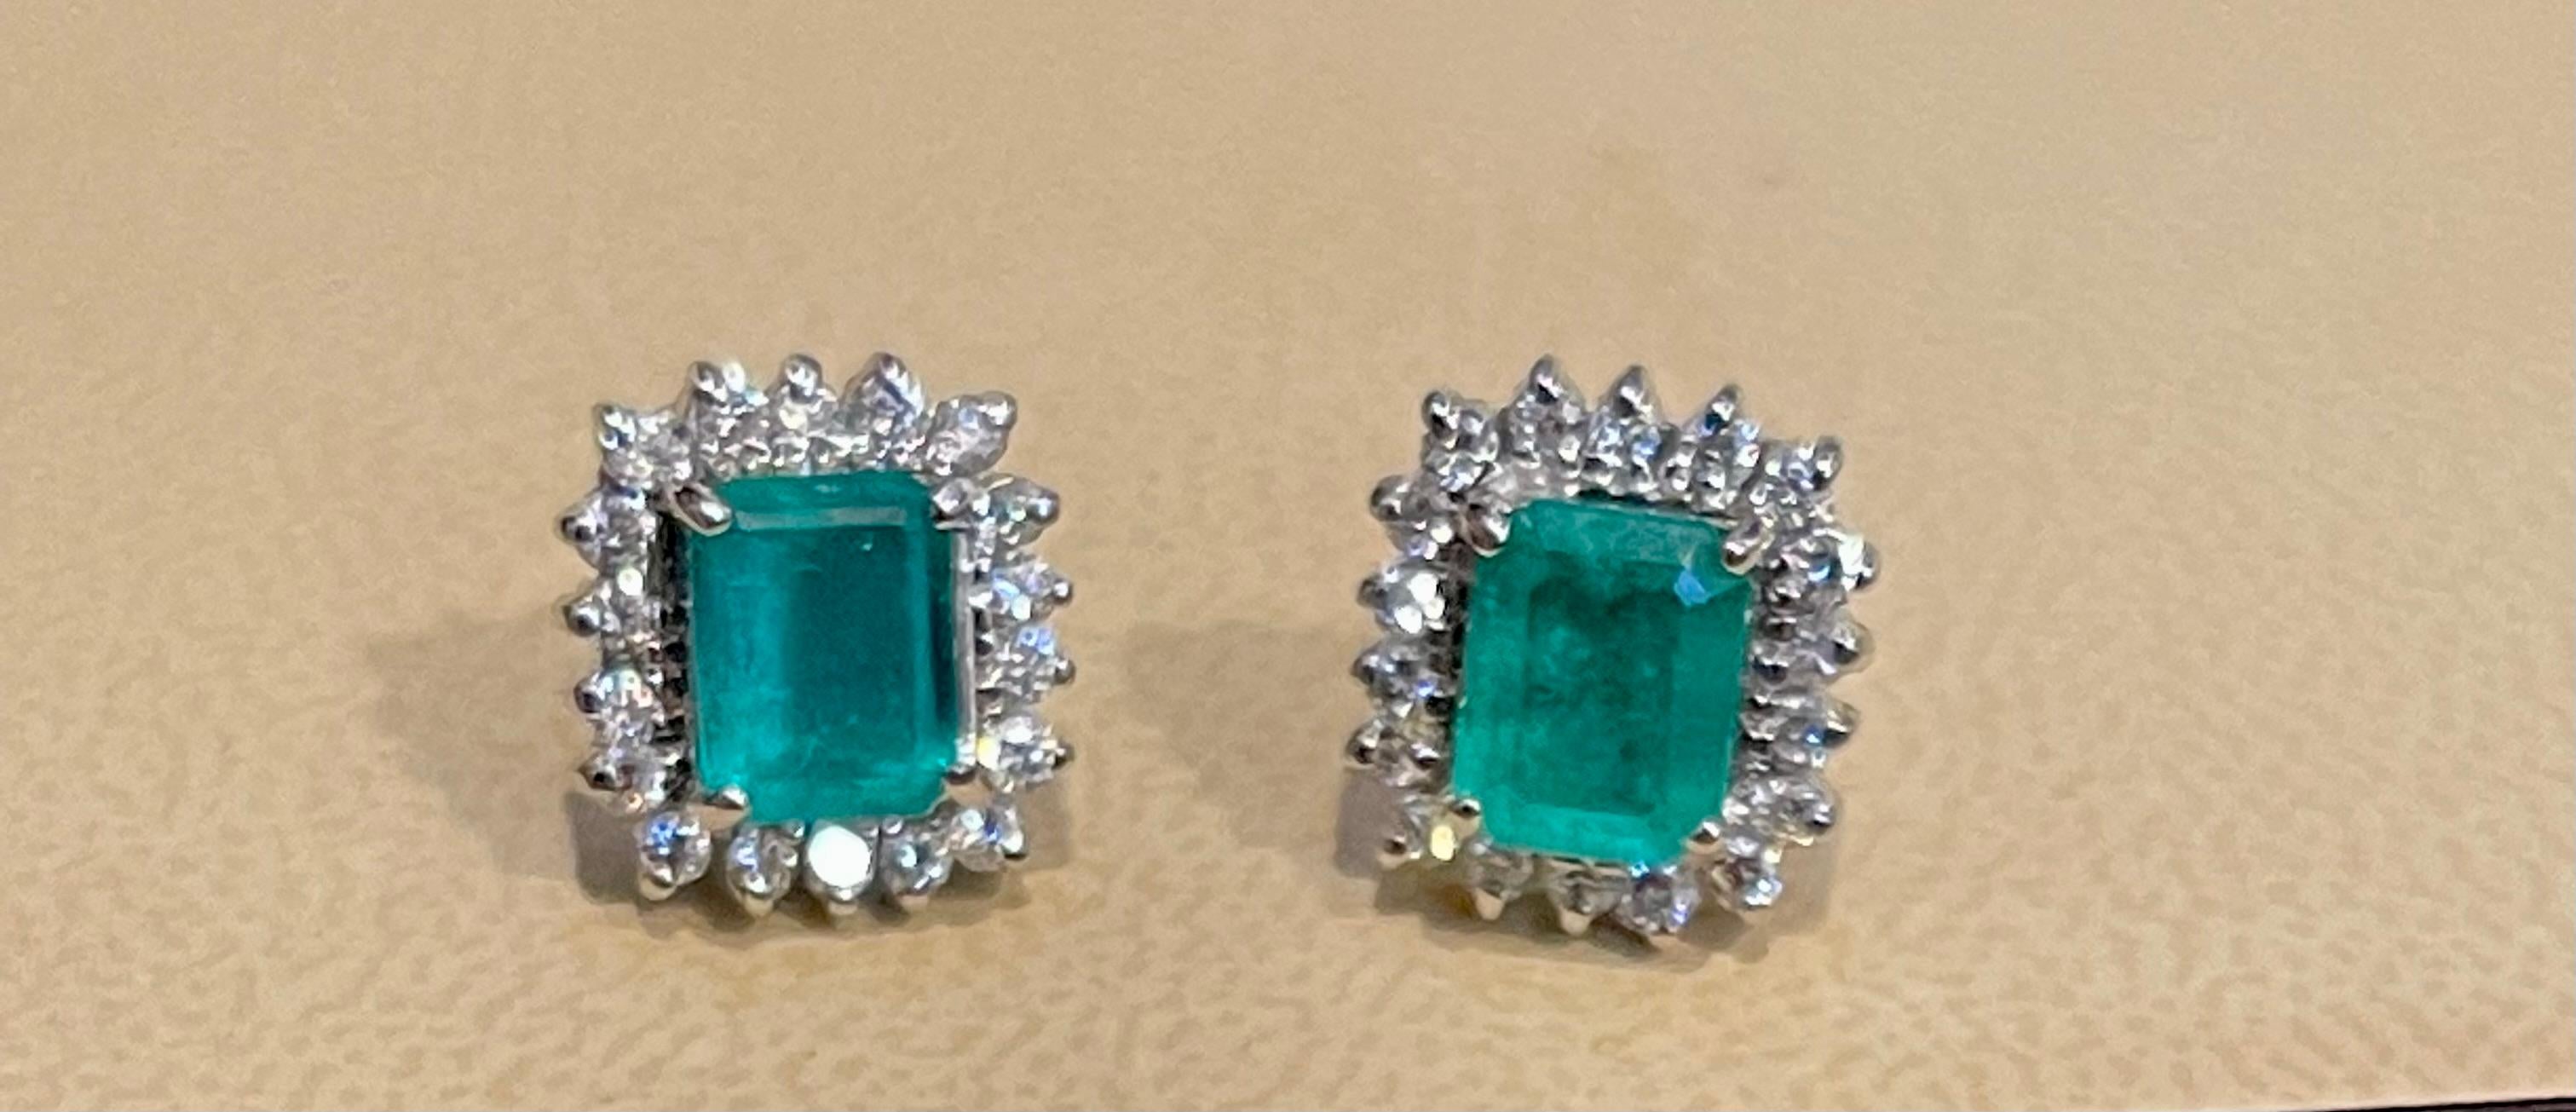 2. 25 Ct Colombian Emerald Cut Emerald & Diamond Earrings 18 Karat White Gold 4